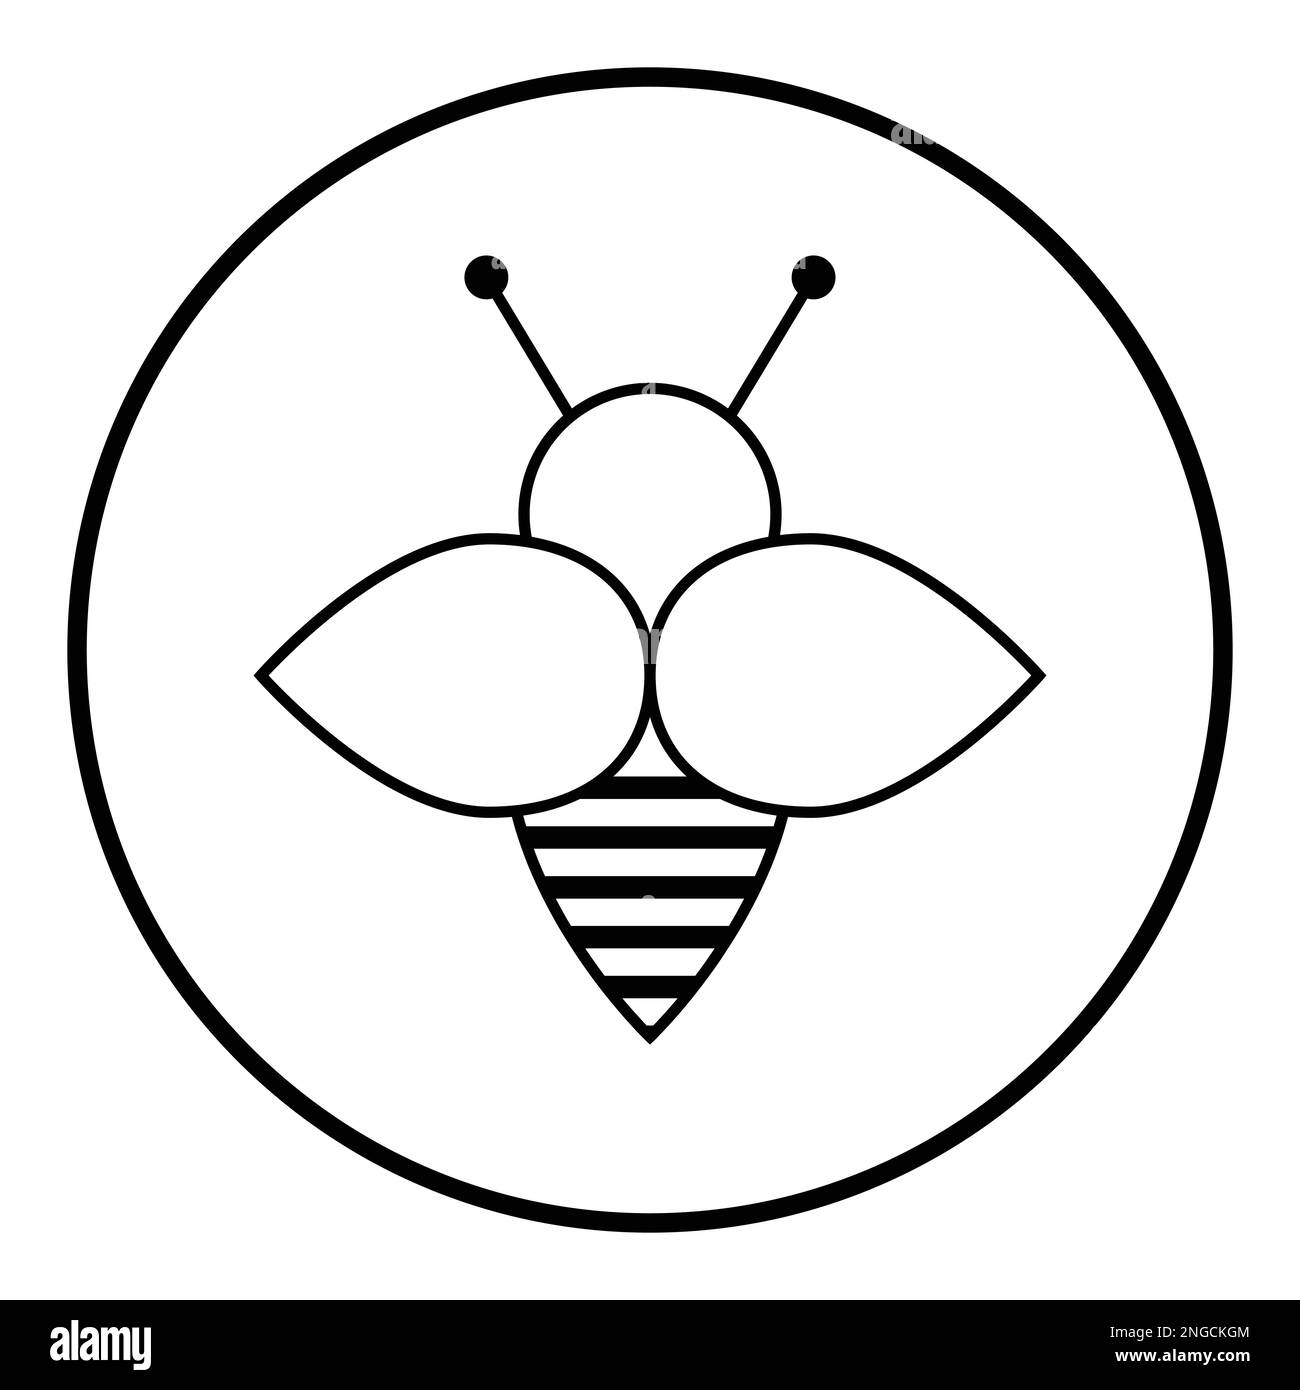 Bee illustration design. Honey bee flat design. Elegant icon illustration. Stock Vector